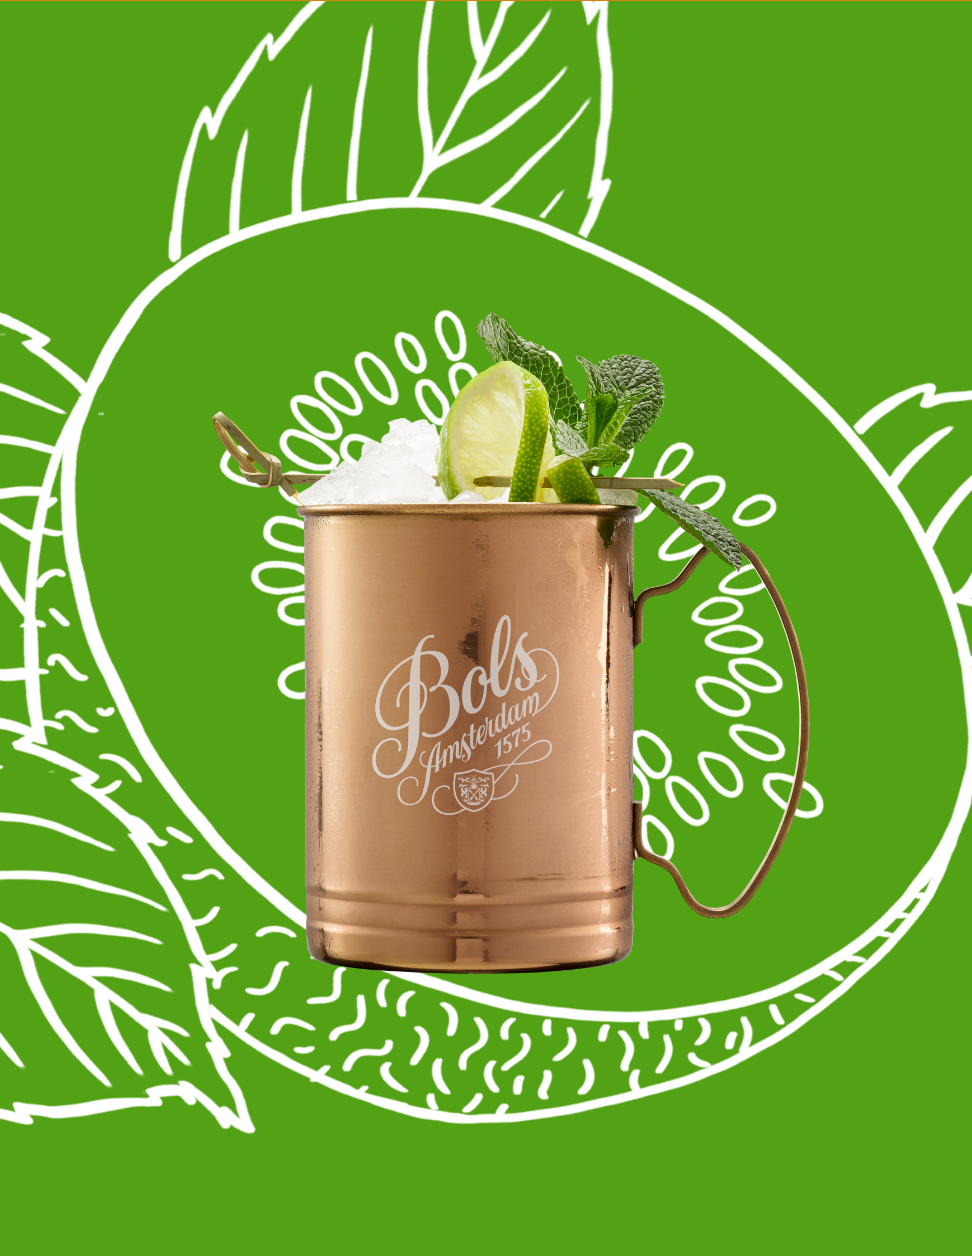 Kiwi Mule Cocktail Recipe with Bols Kiwi Products